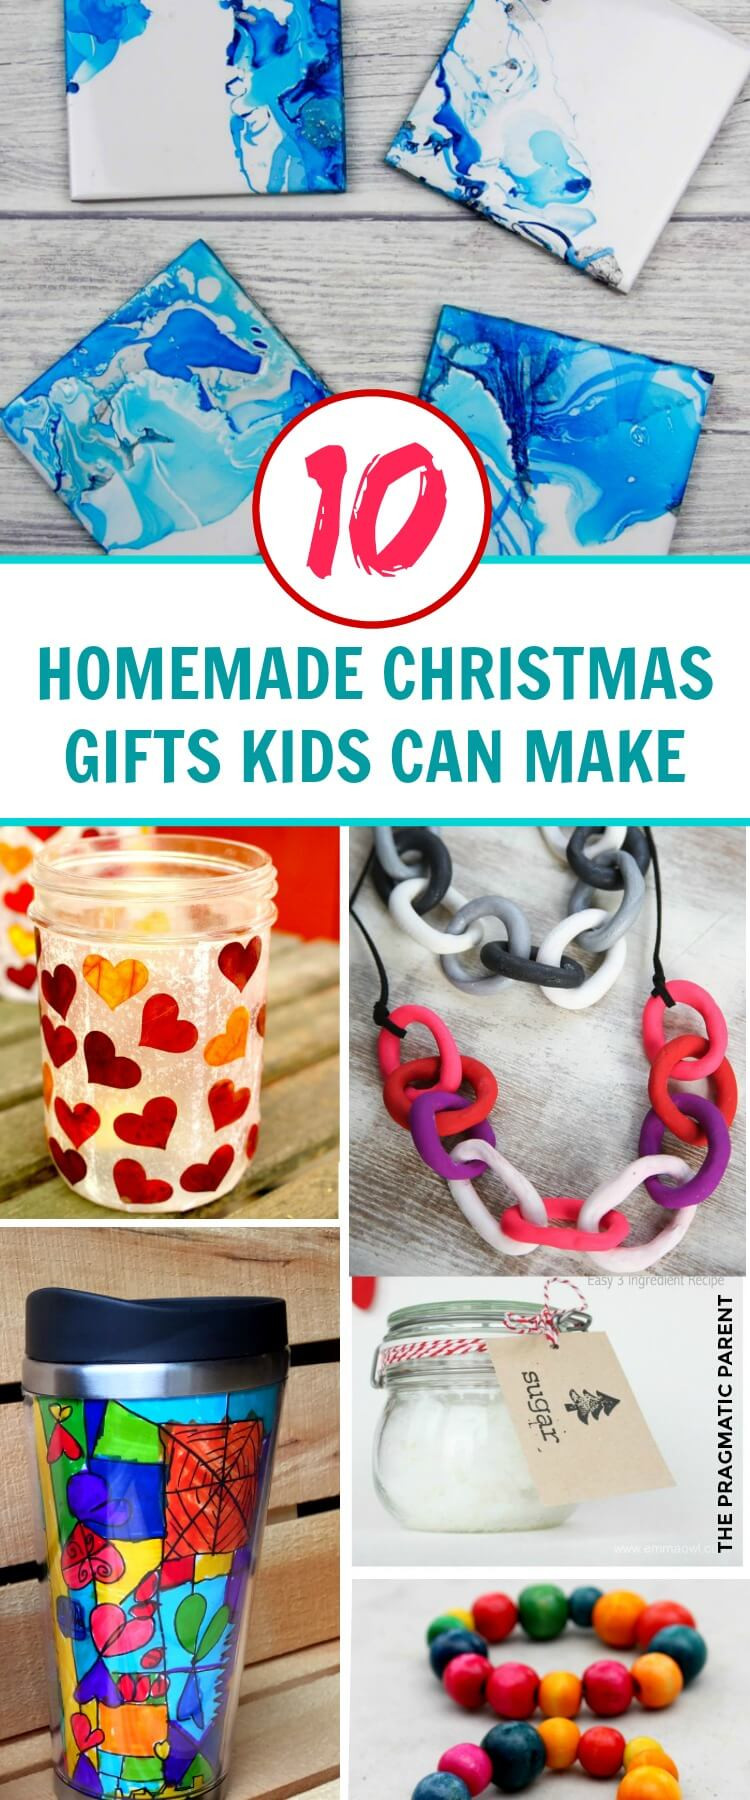 Holiday Gifts Kids Can Make
 10 Beautiful Homemade Christmas Gifts Kids Can Make